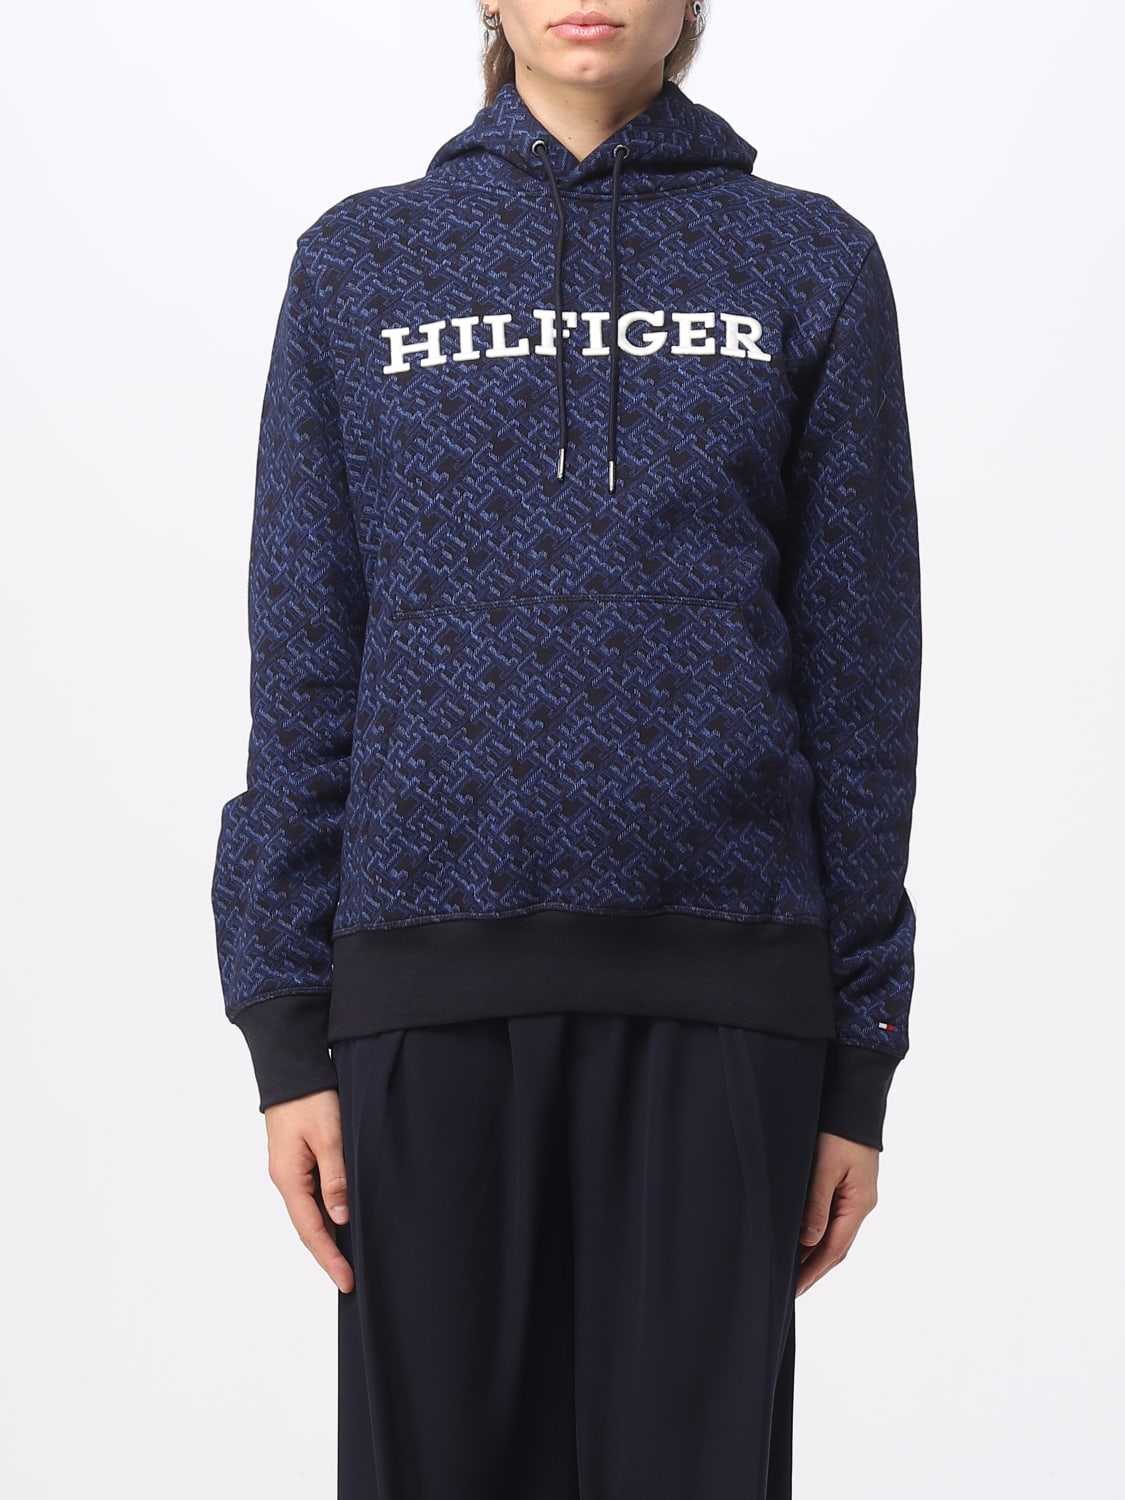 TOMMY HILFIGER: sweatshirt for man - Blue | Hilfiger sweatshirt MW0MW32703 online at GIGLIO.COM